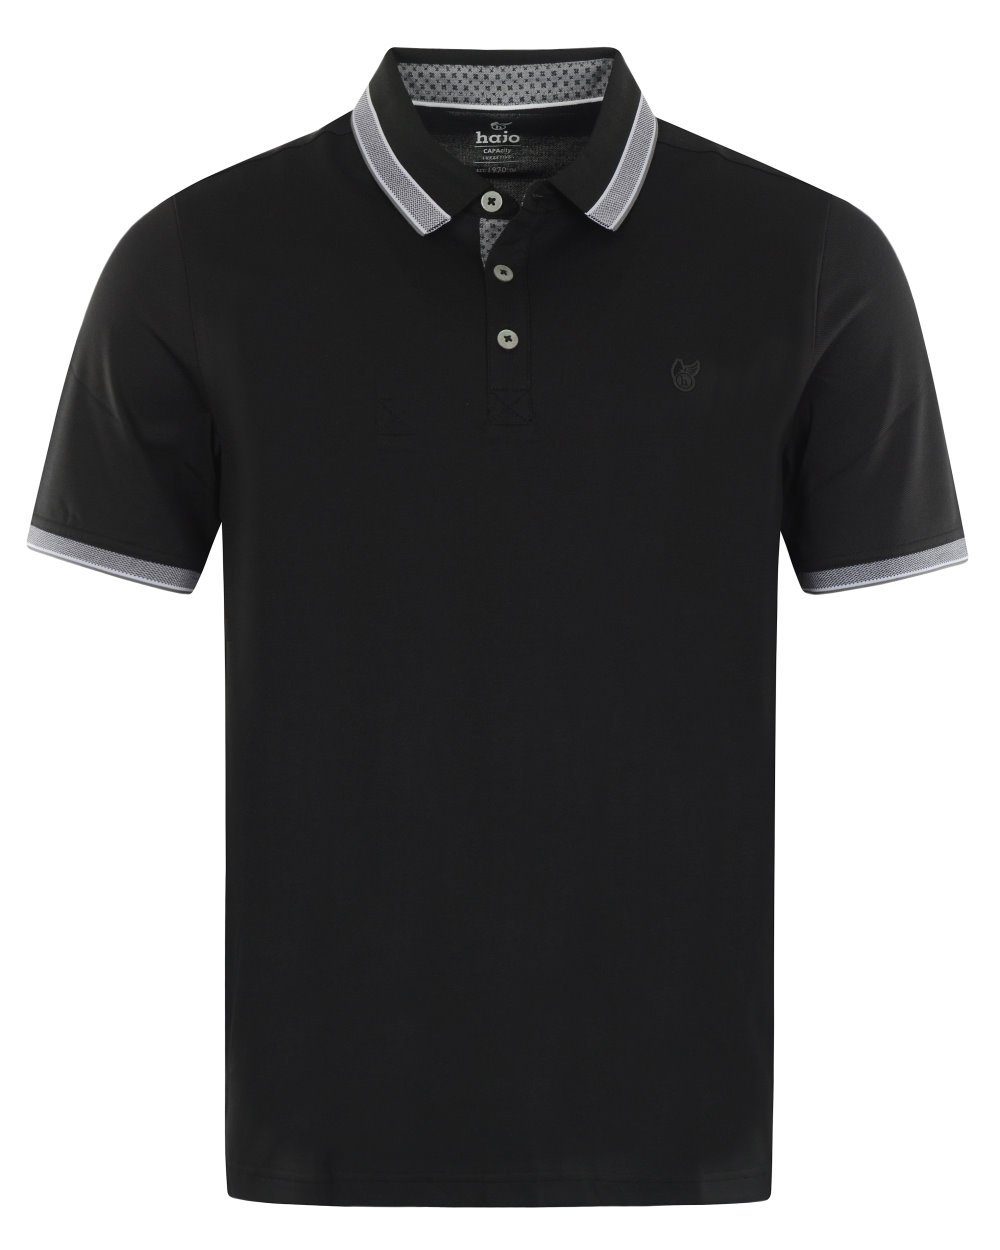 Hajo Poloshirt Herren Poloshirt mit kurzem Arm (1-tlg) Pique Qualität schwarz | Poloshirts